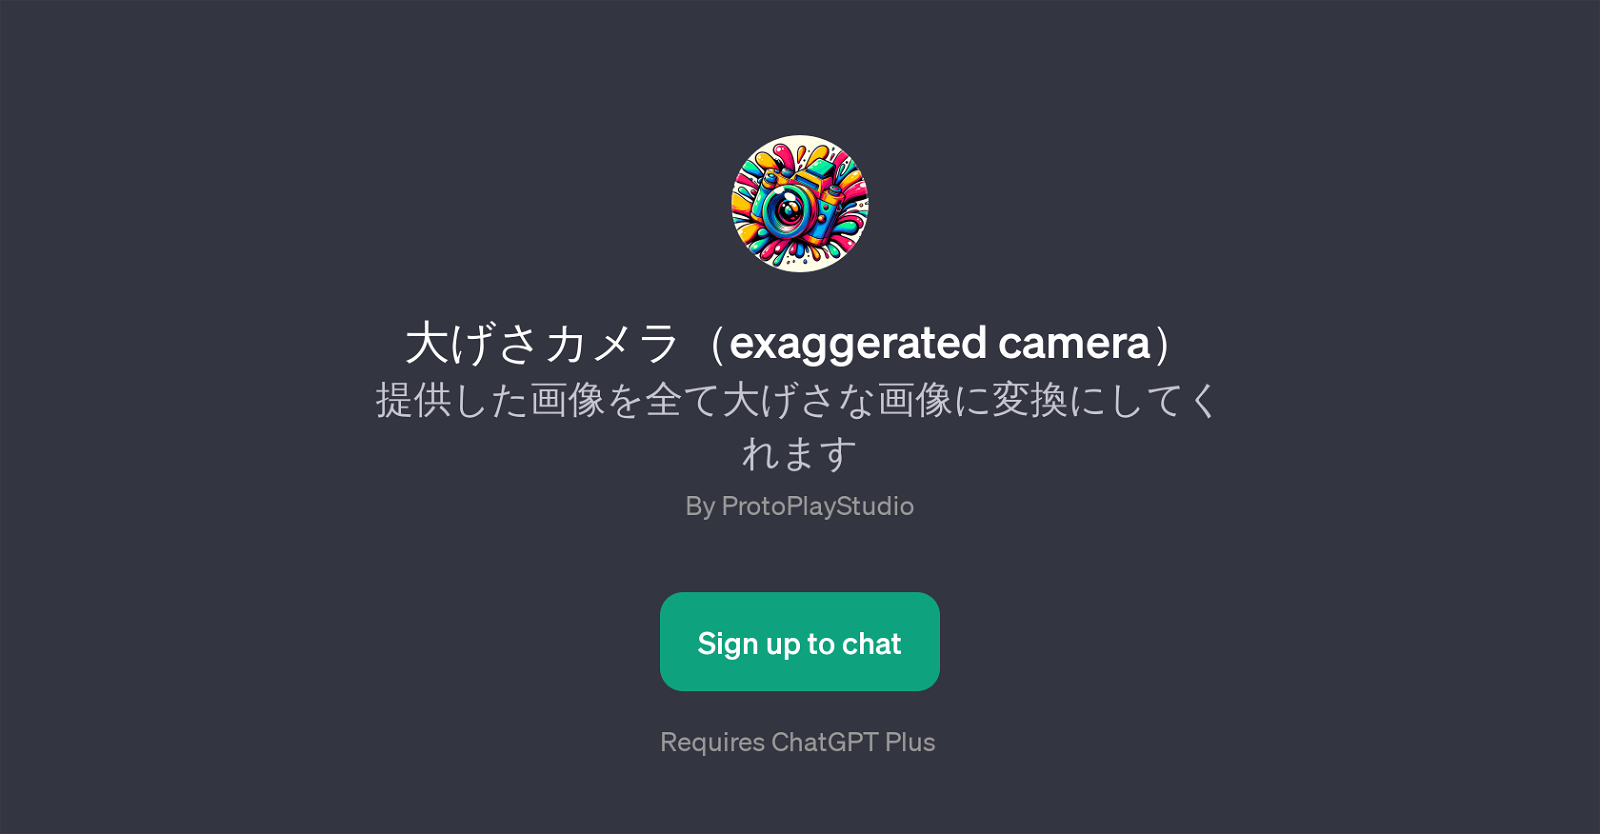 exaggerated camera website